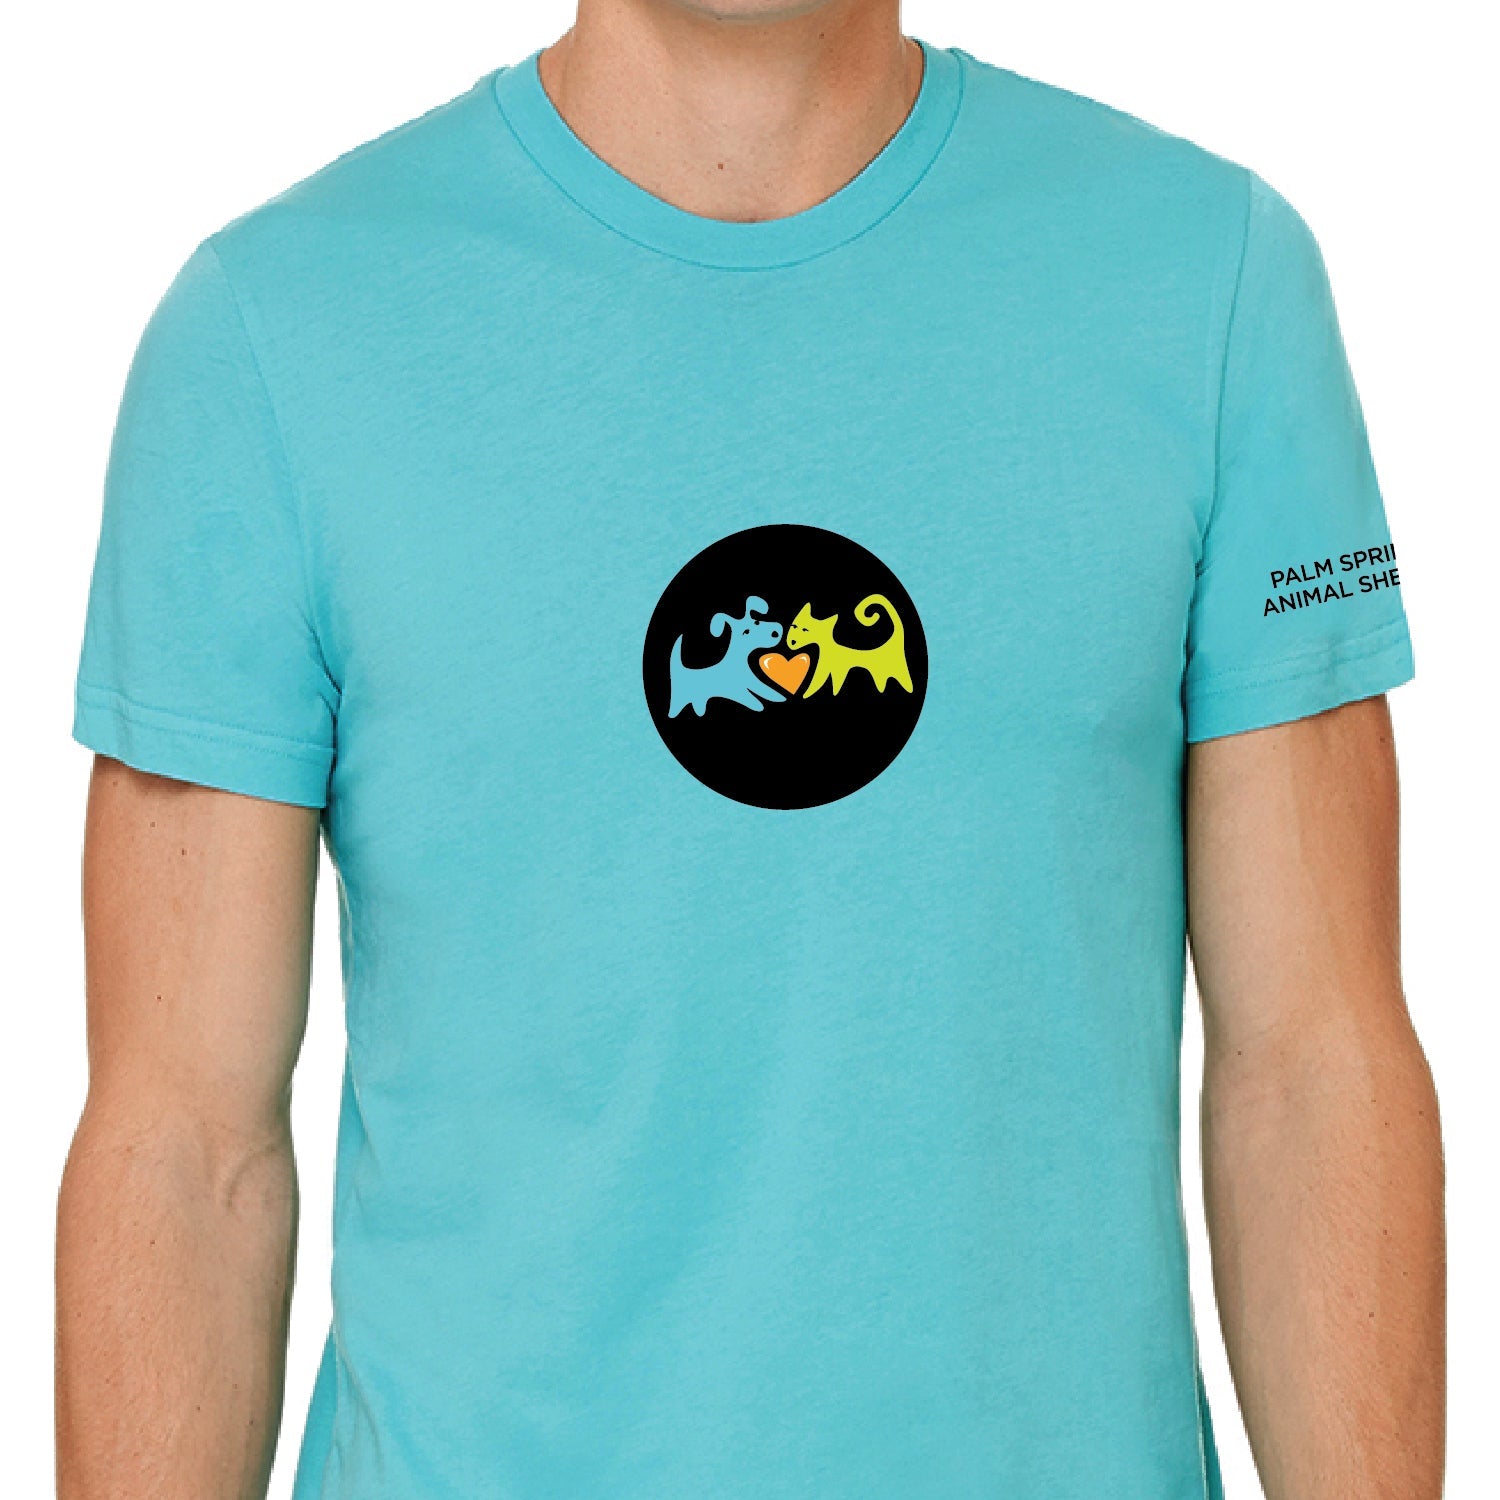 Palm Springs Animal Shelter Unisex T-shirt - Destination PSP